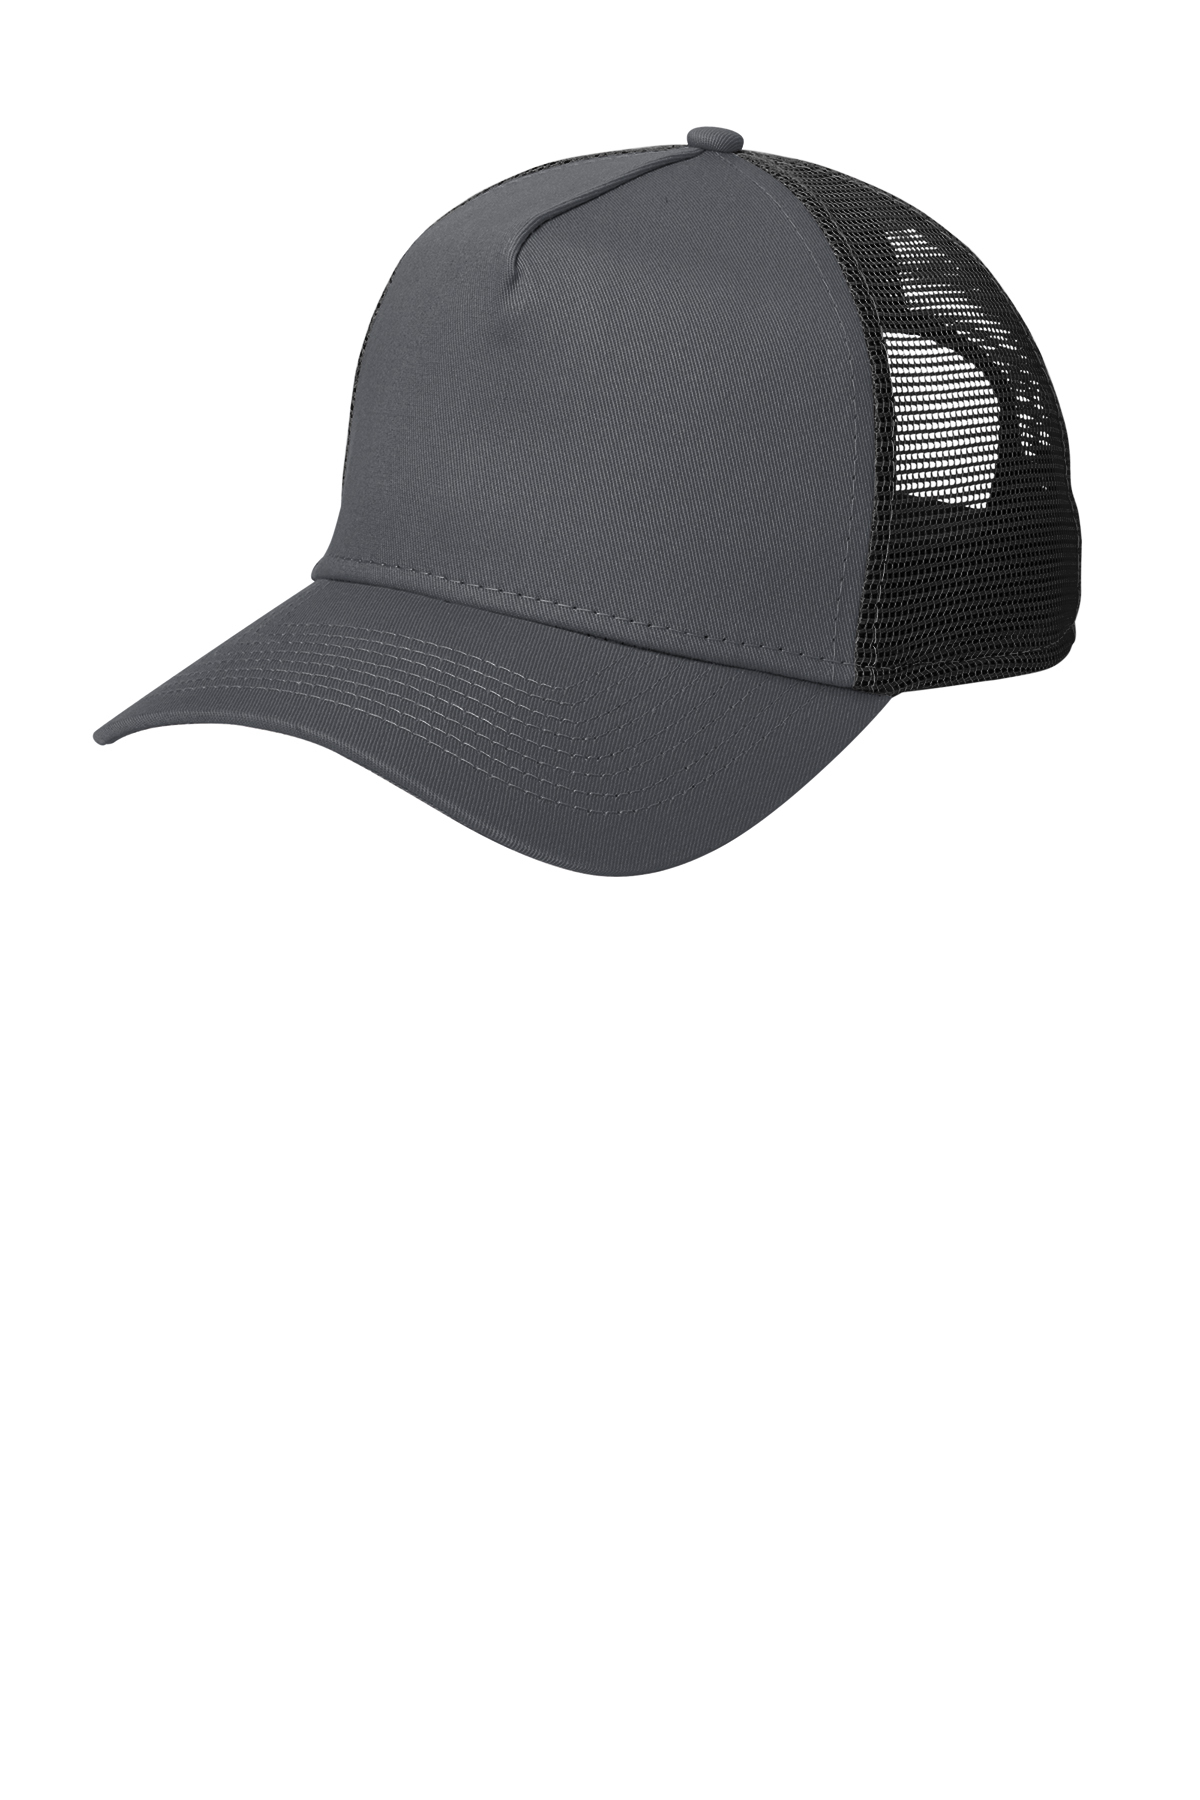 New Era ® Snapback Trucker Cap | Product | SanMar